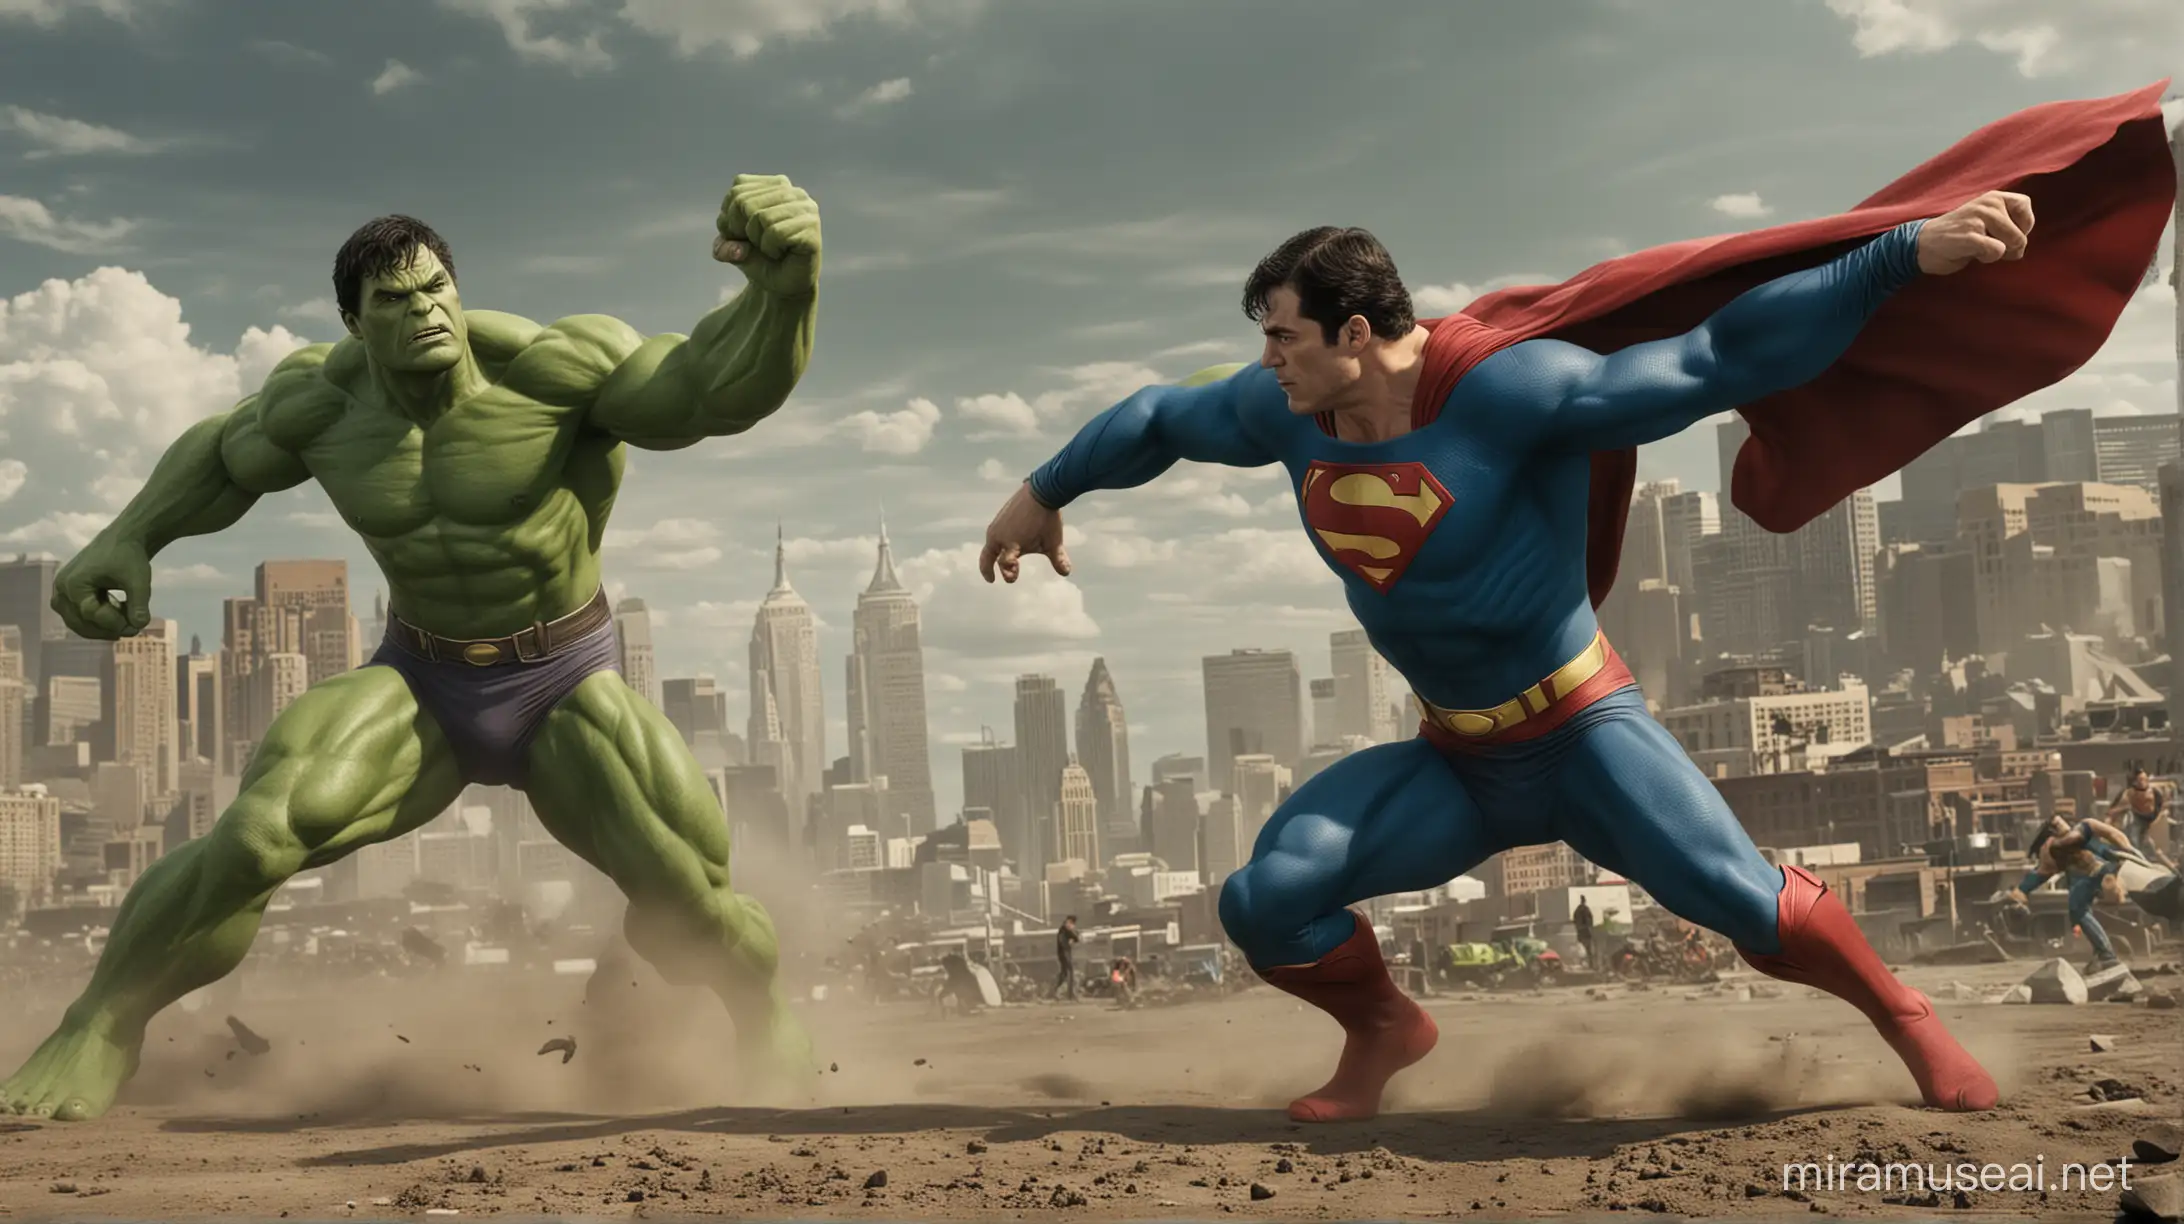 Superman versus hulk